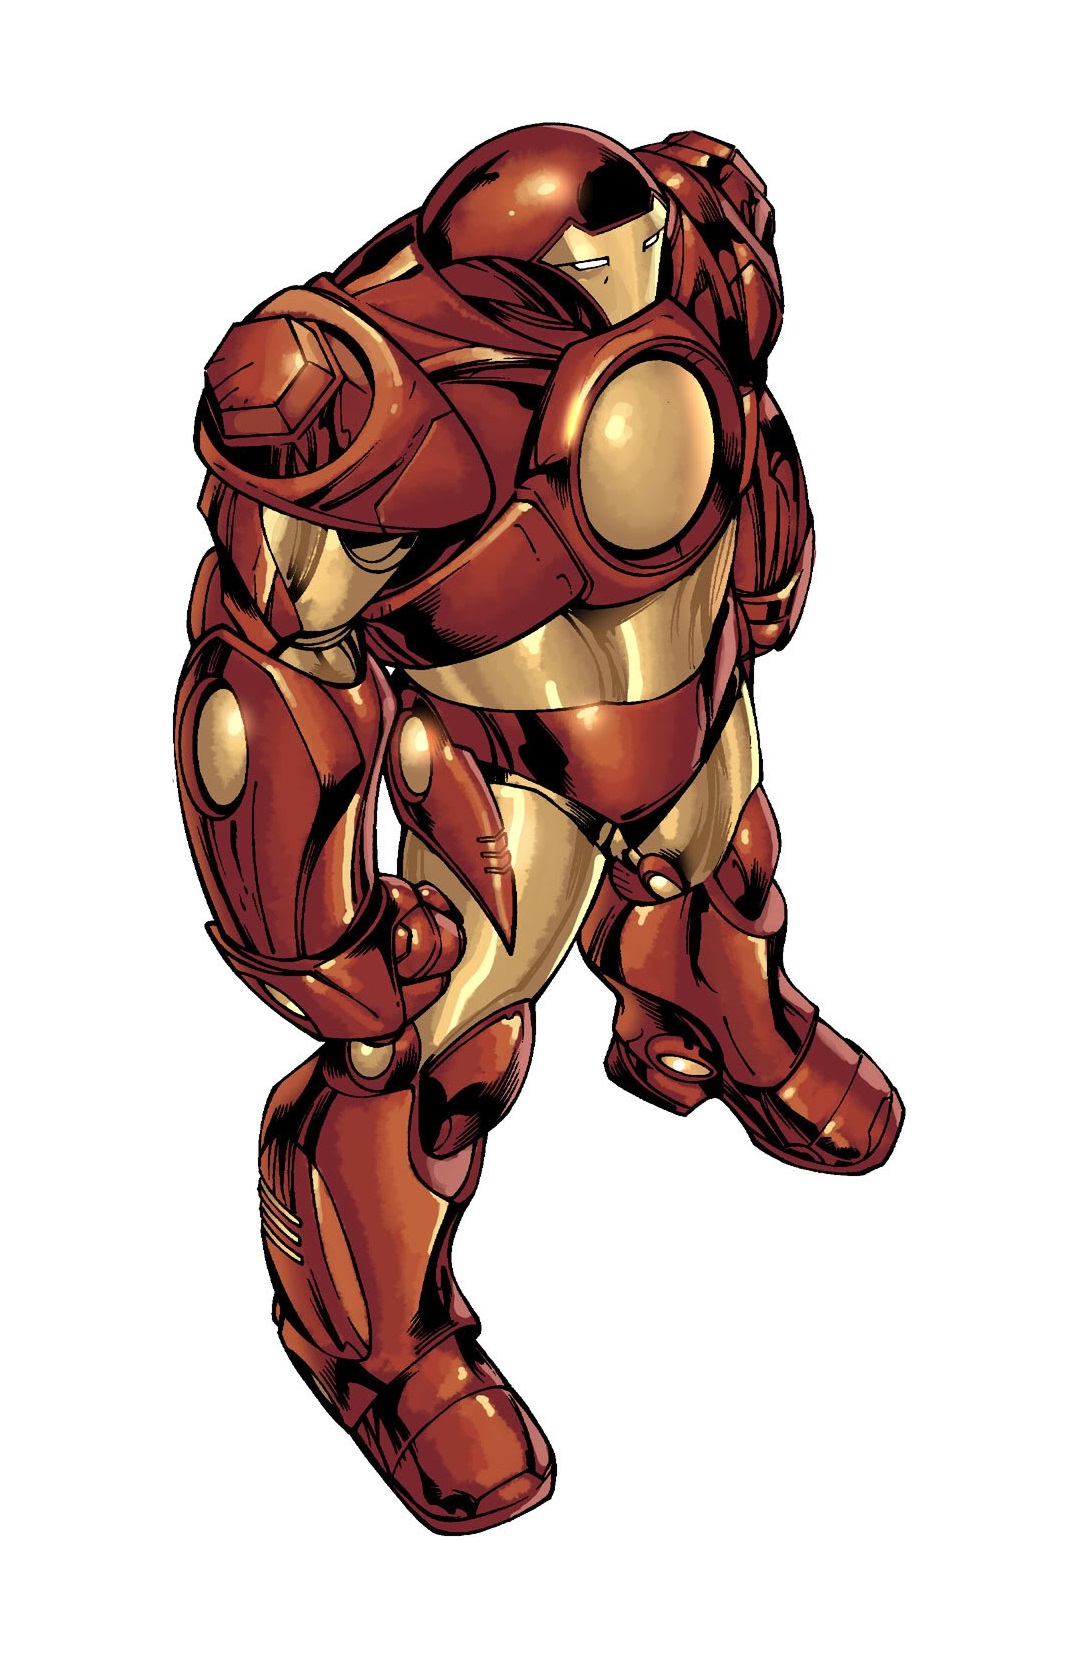 Iron Man Armor, Marvel Database